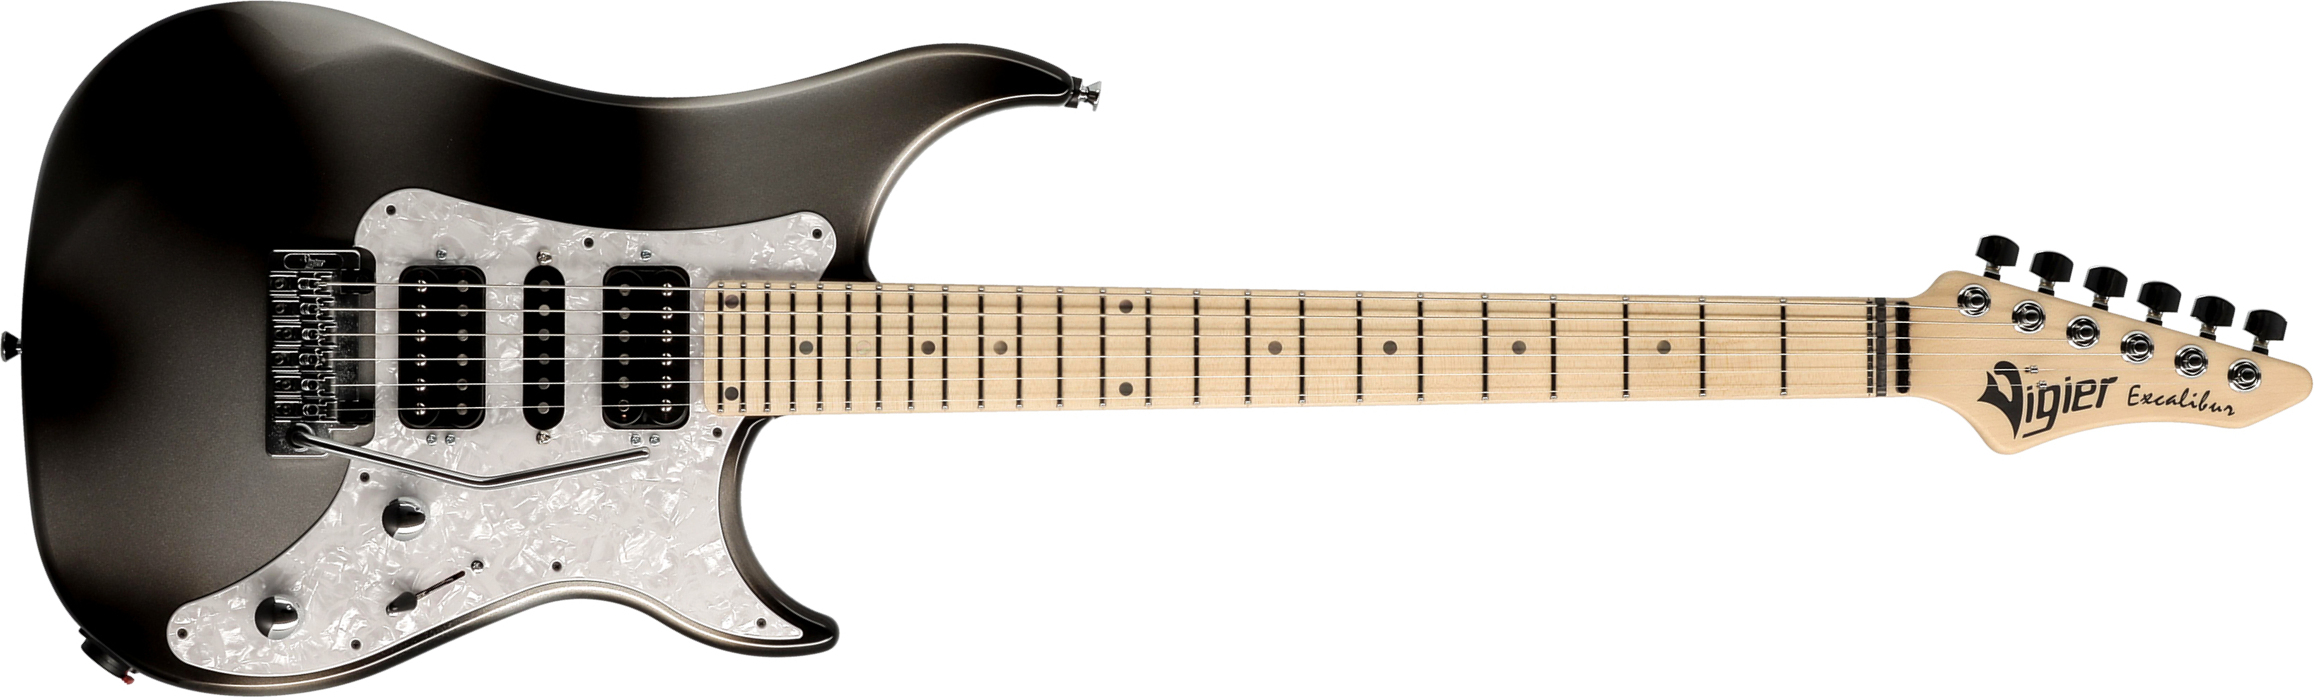 Vigier Excalibur Supraa Hsh Trem Mn - Urban Metal - Str shape electric guitar - Main picture